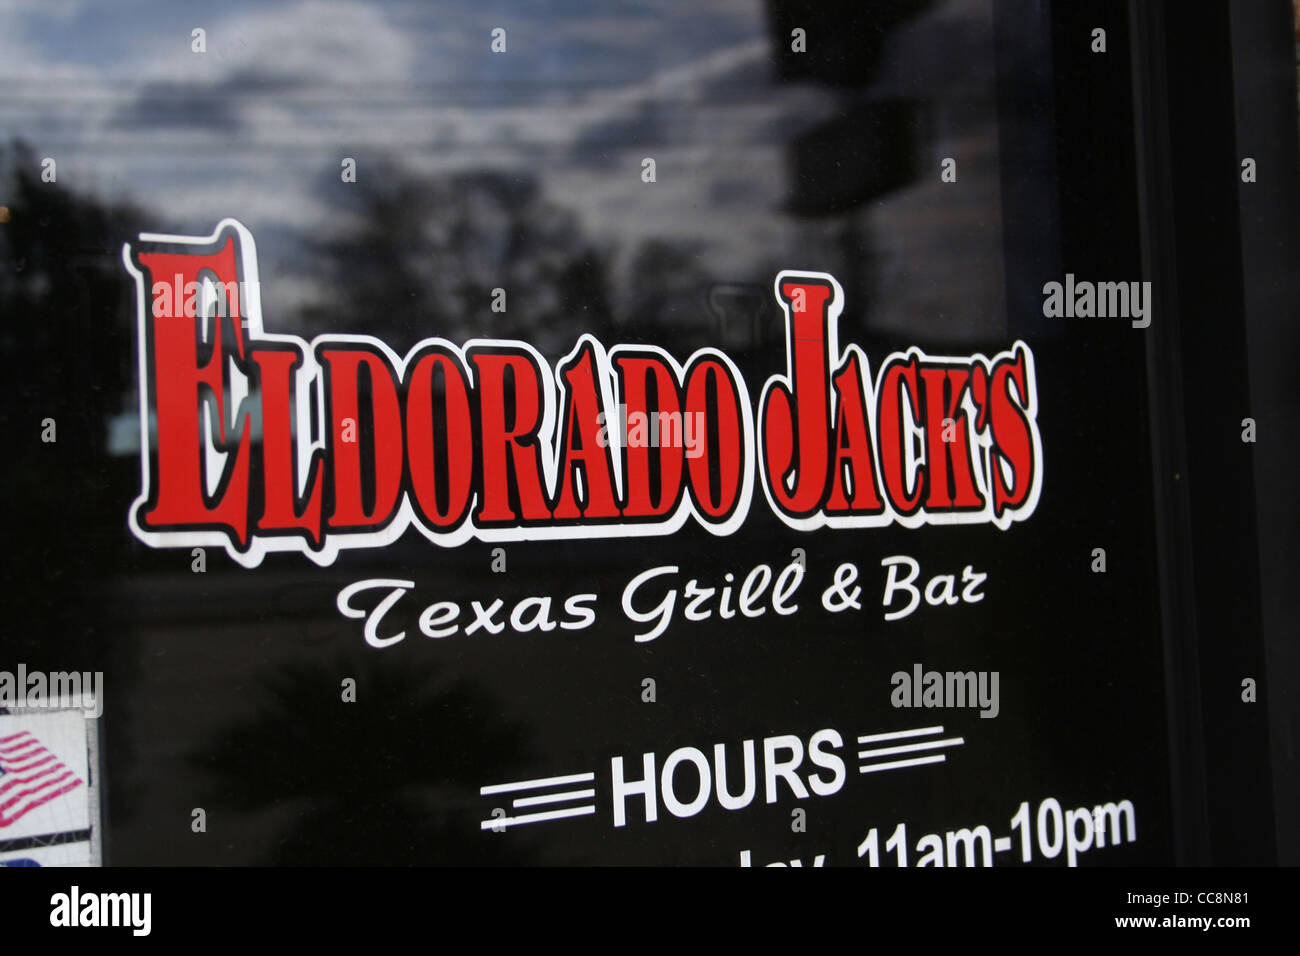 Eldorado Jack's Texas Grill & Bar - Jacksonville, TX - Novembre 2011 Foto Stock